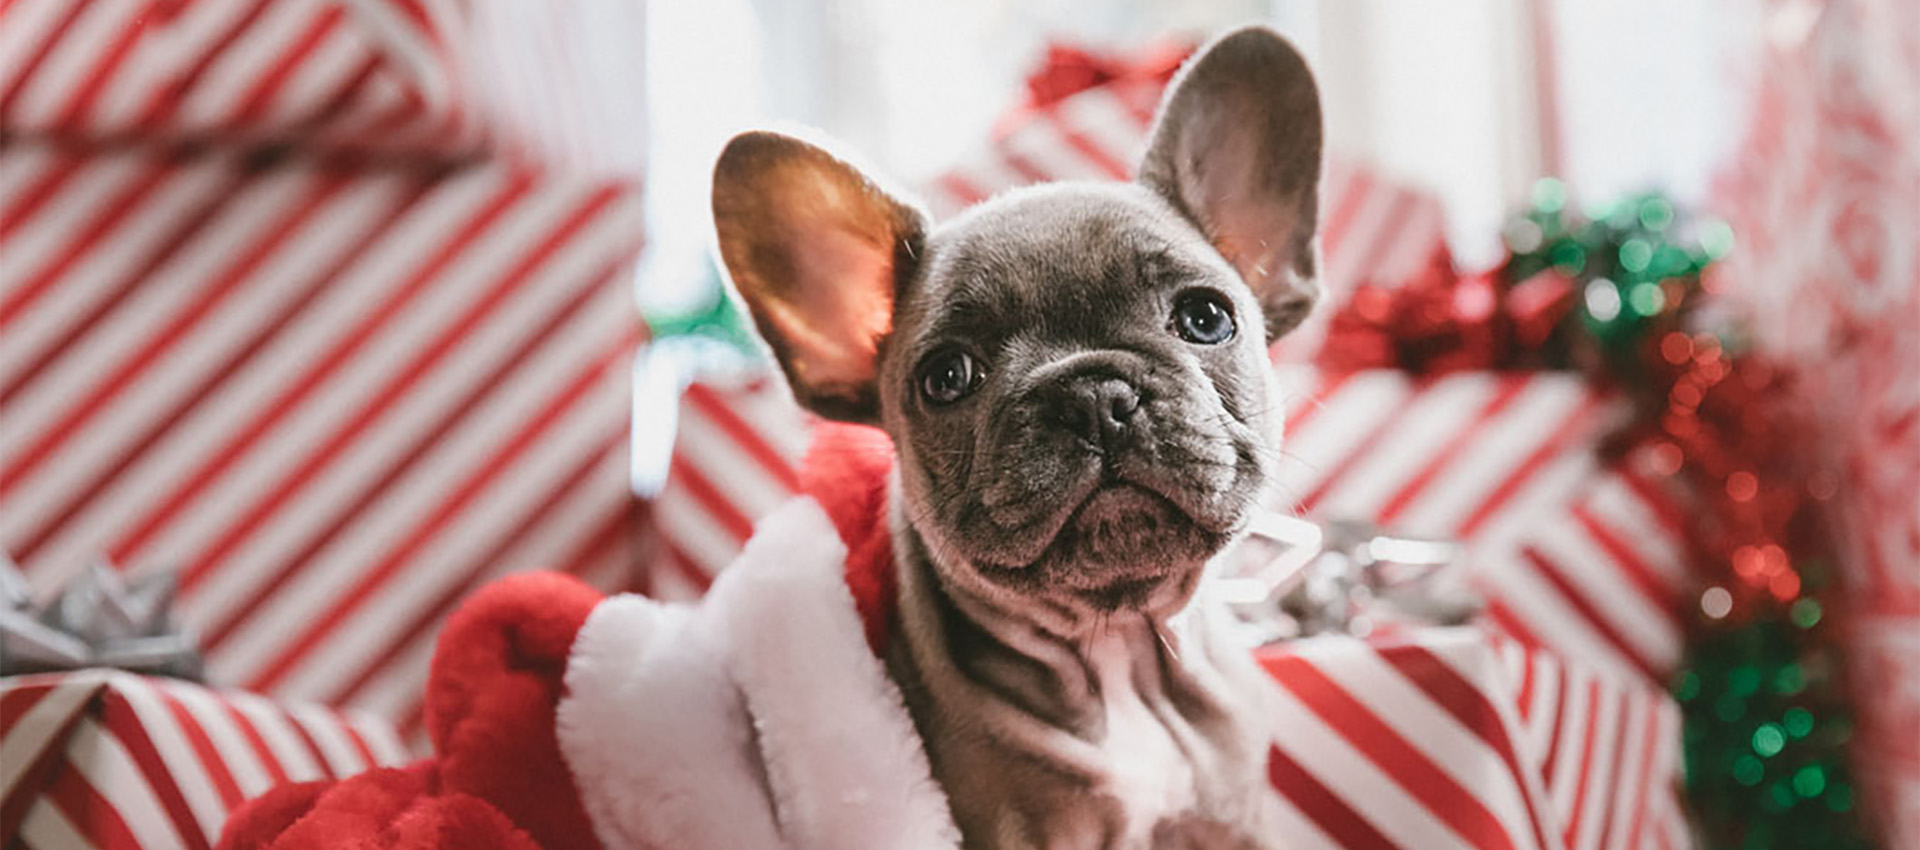 Festive image of a dog at Christmas 